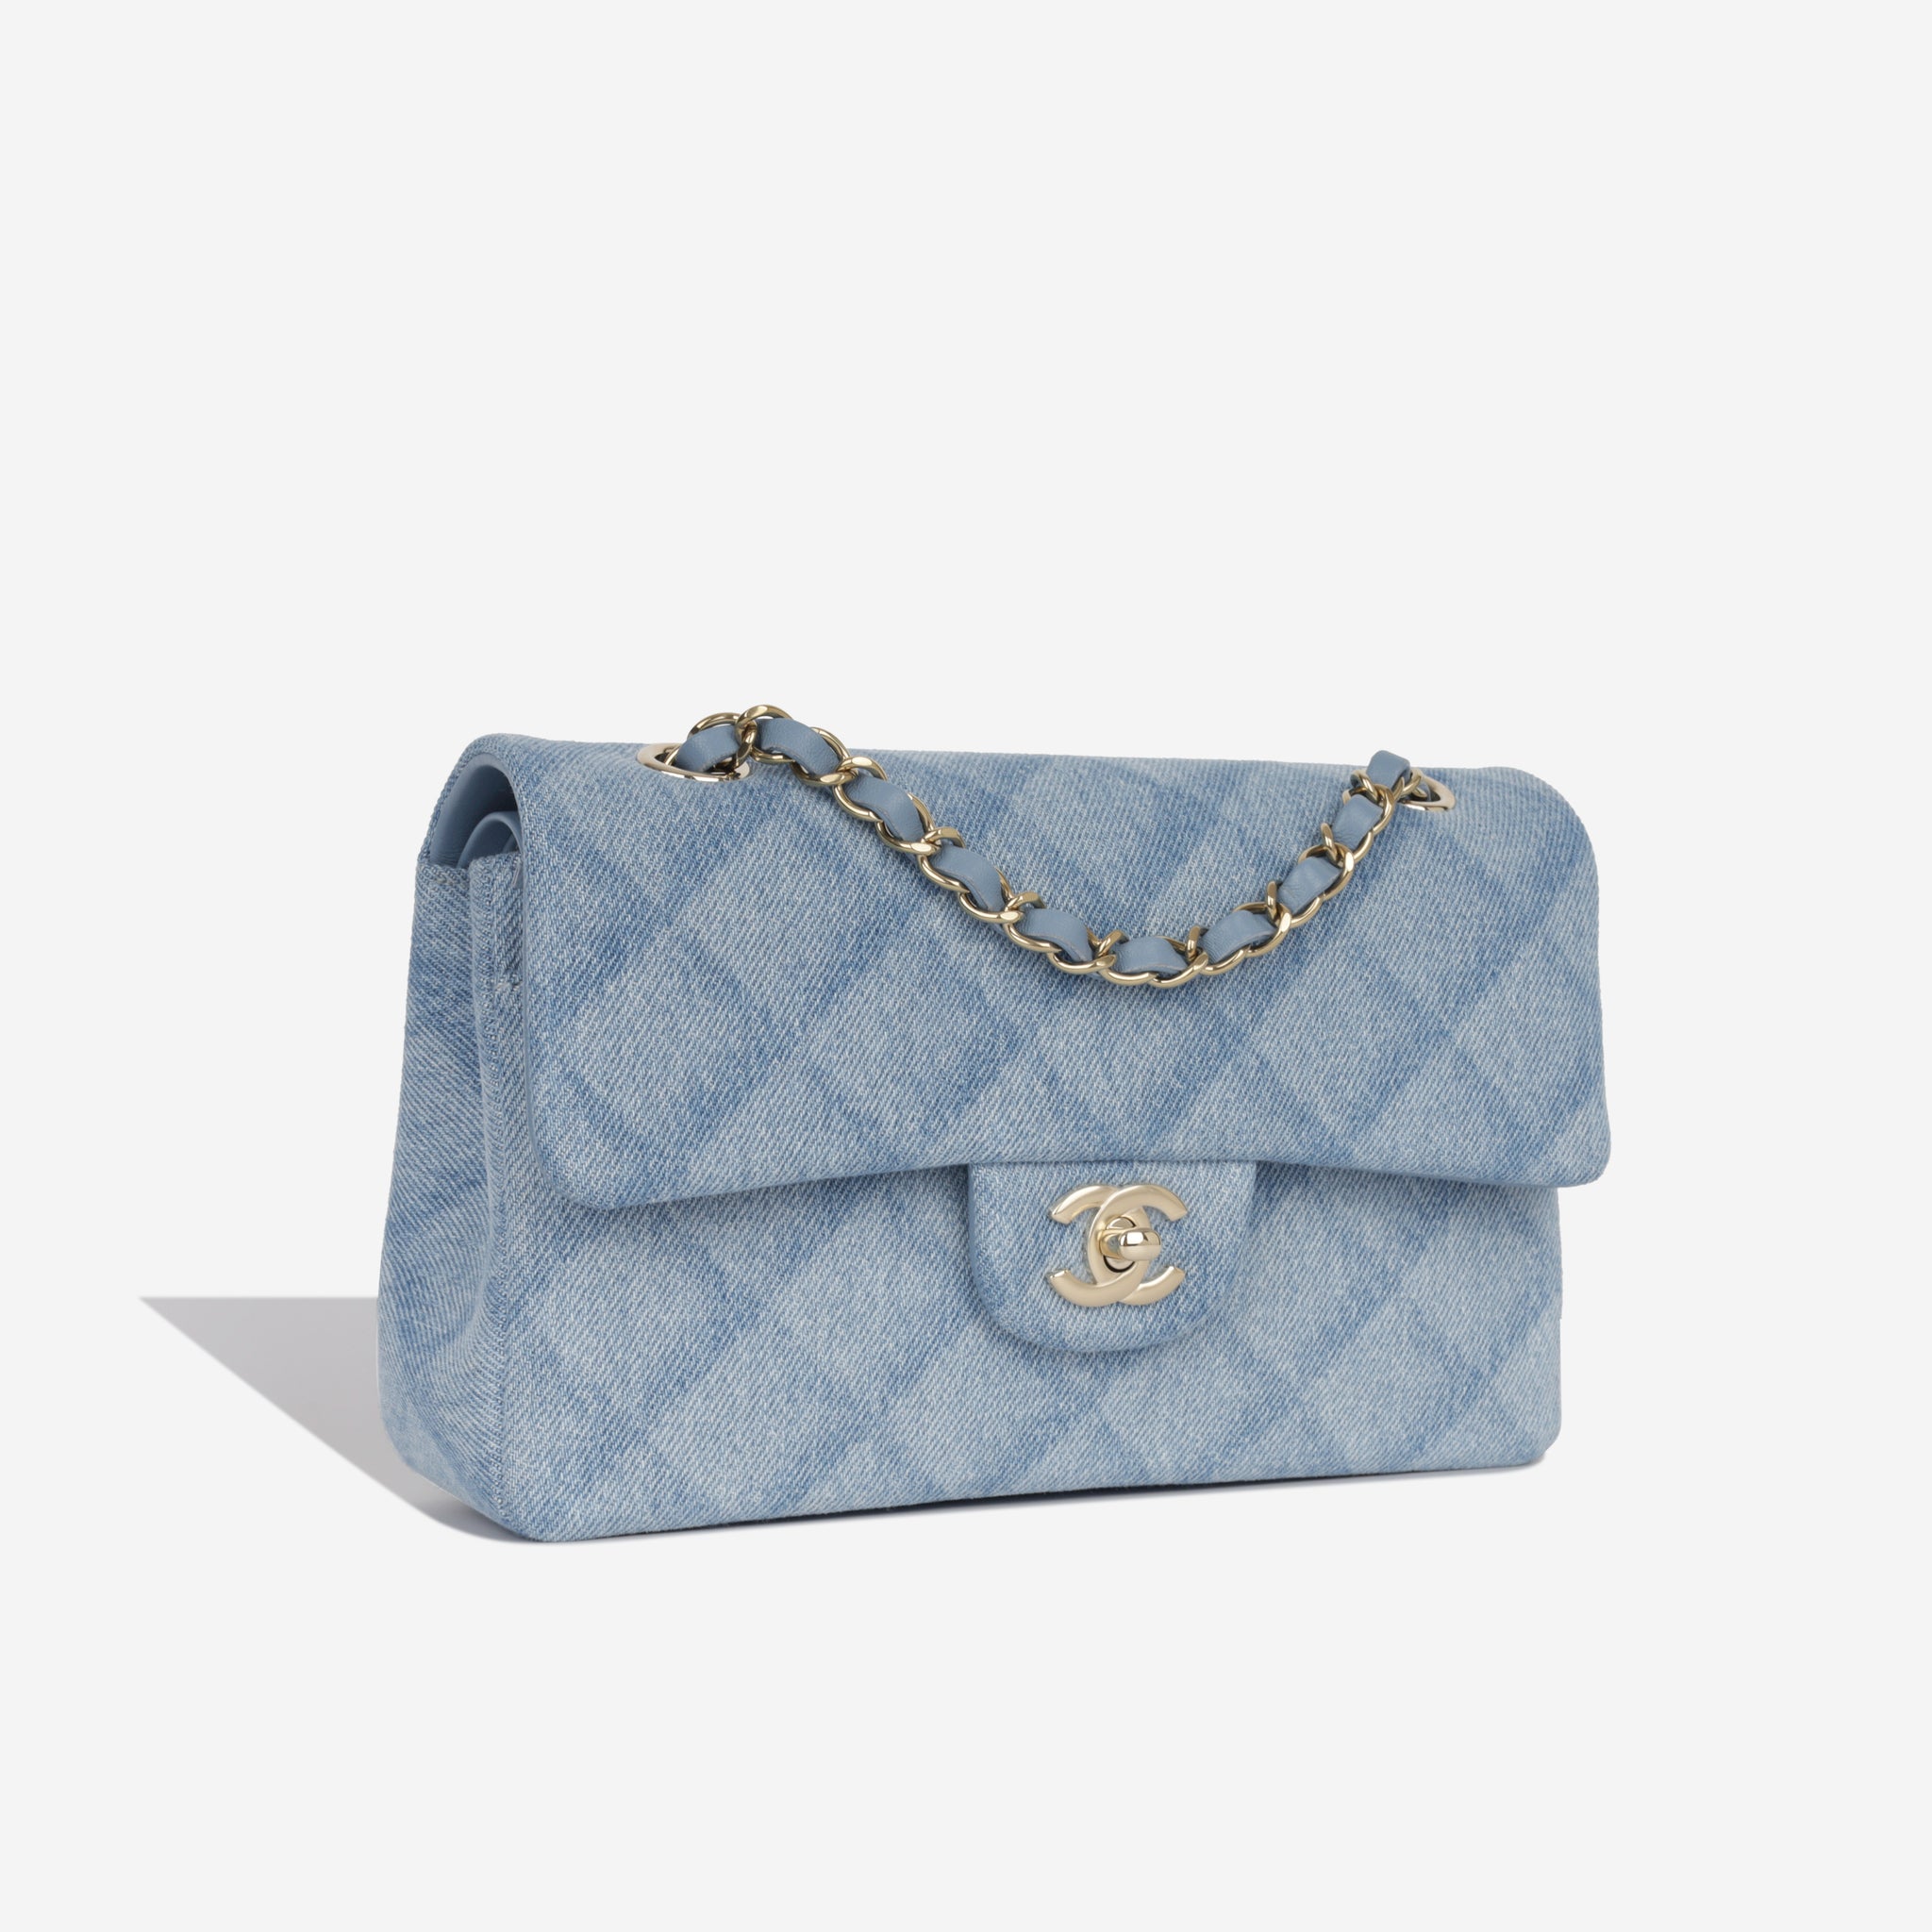 Chanel Denim & Gold Chain Handbag